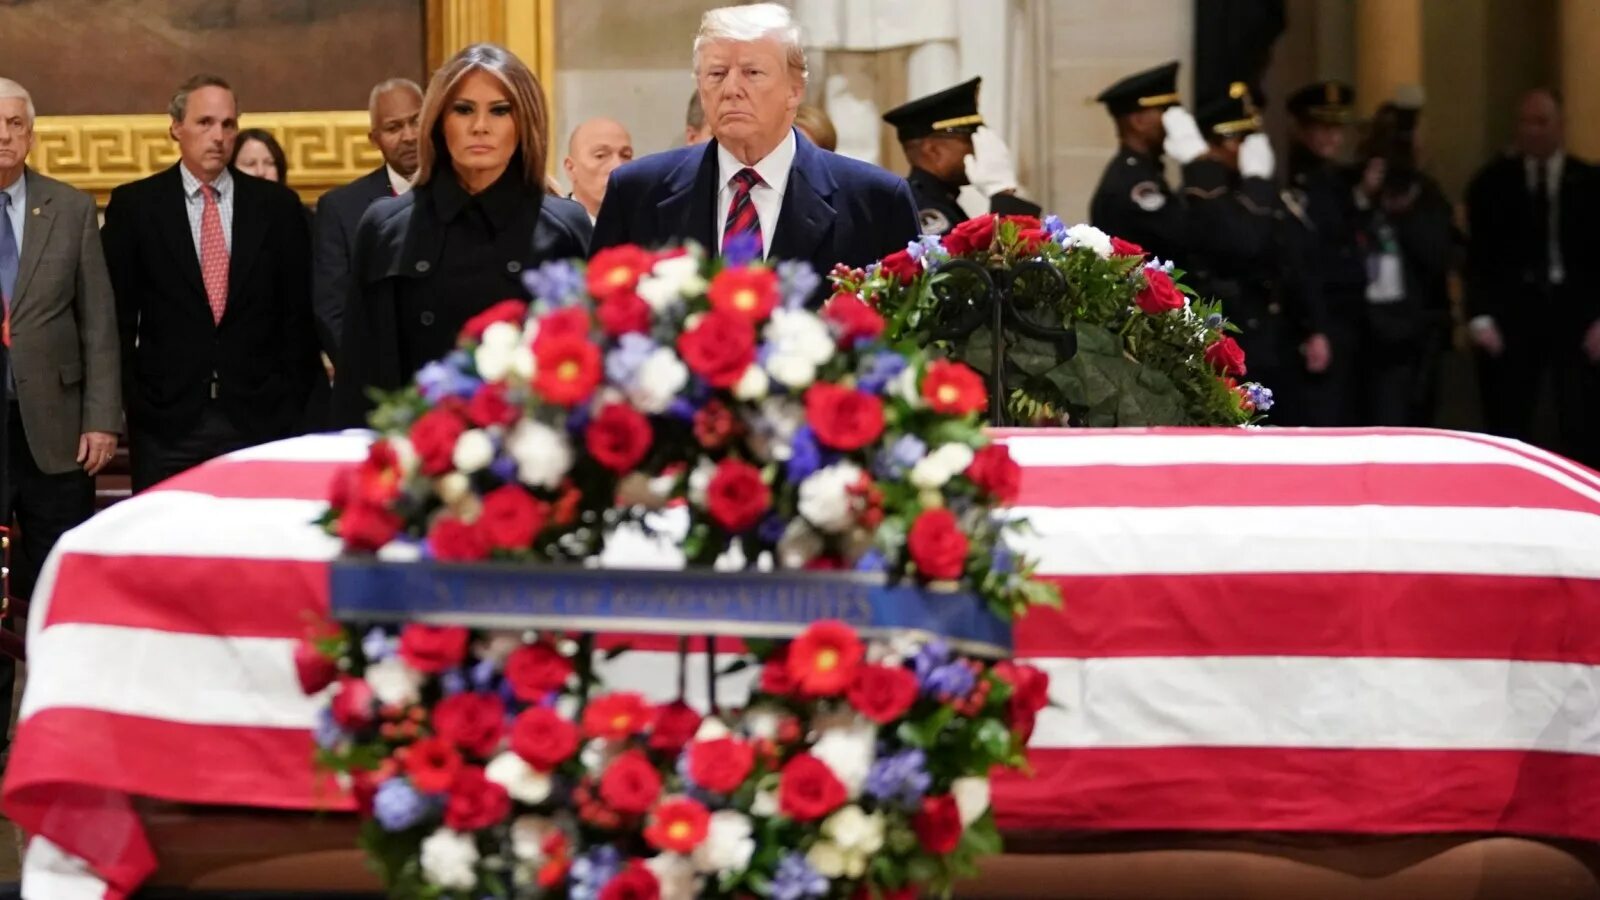 Похороны президента США Джорджа Буша. Похороны Буша старшего. Джордж Буш старший похороны. Похороны Джорджа Буша.